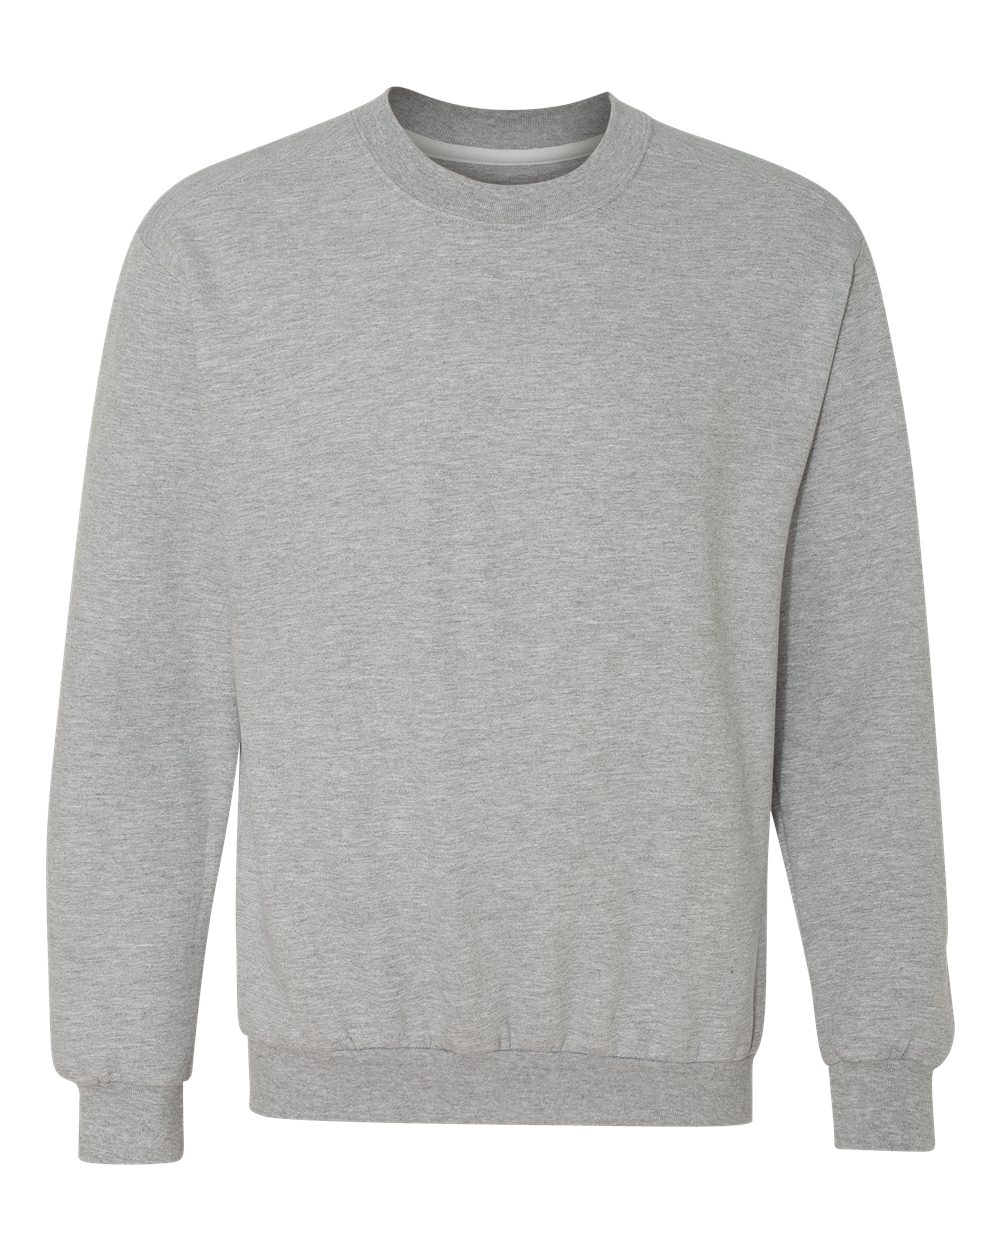 Anvil 71000 Crewneck Sweatshirt–Heather Gray (M)